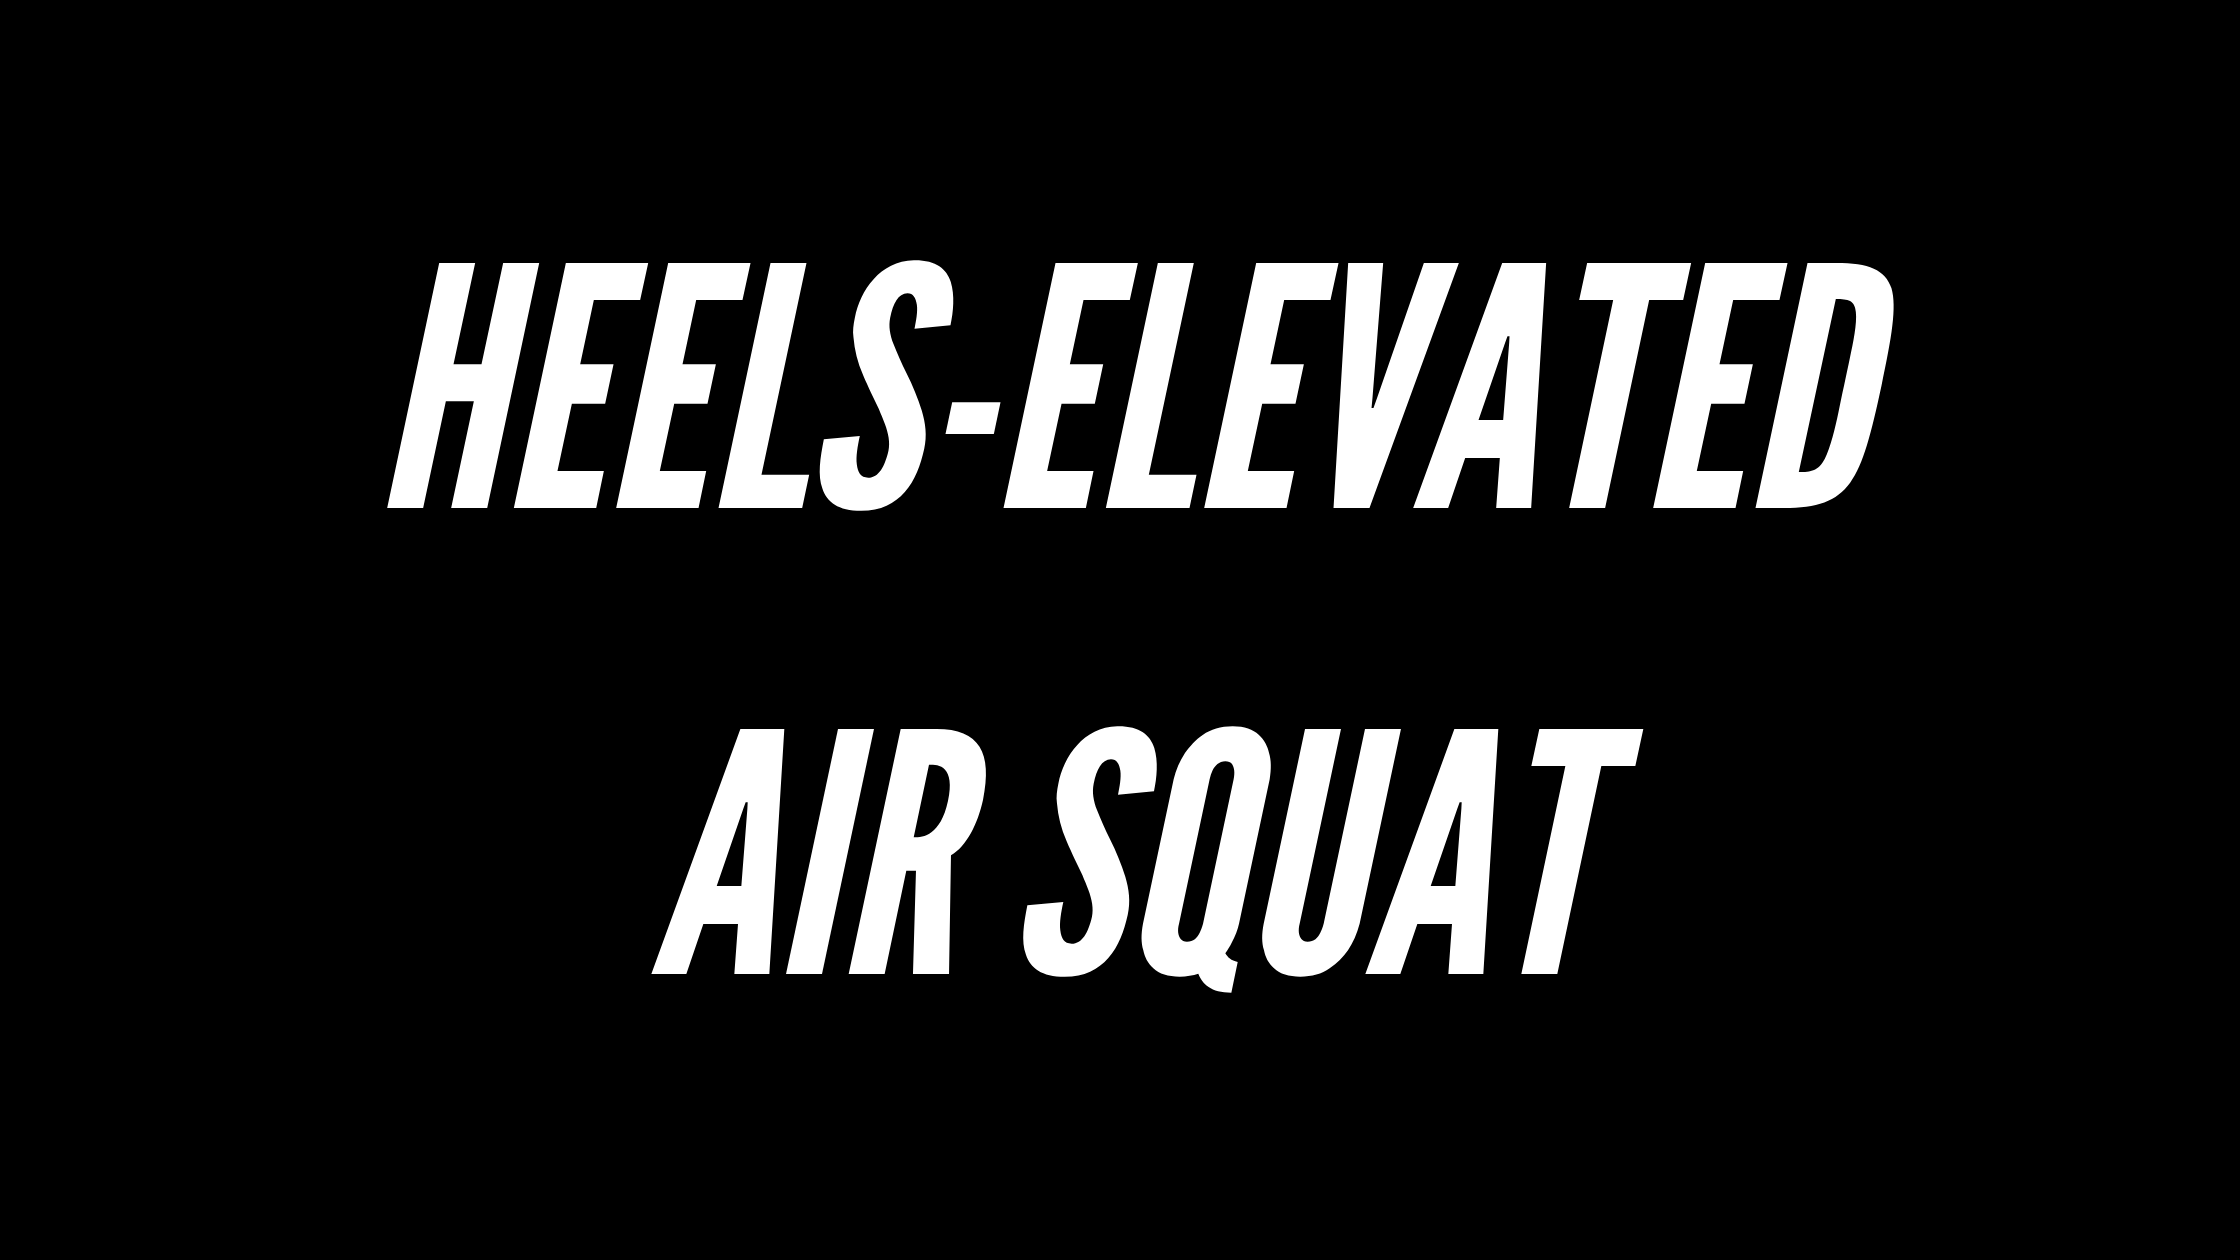 heels-elevated-air-squat